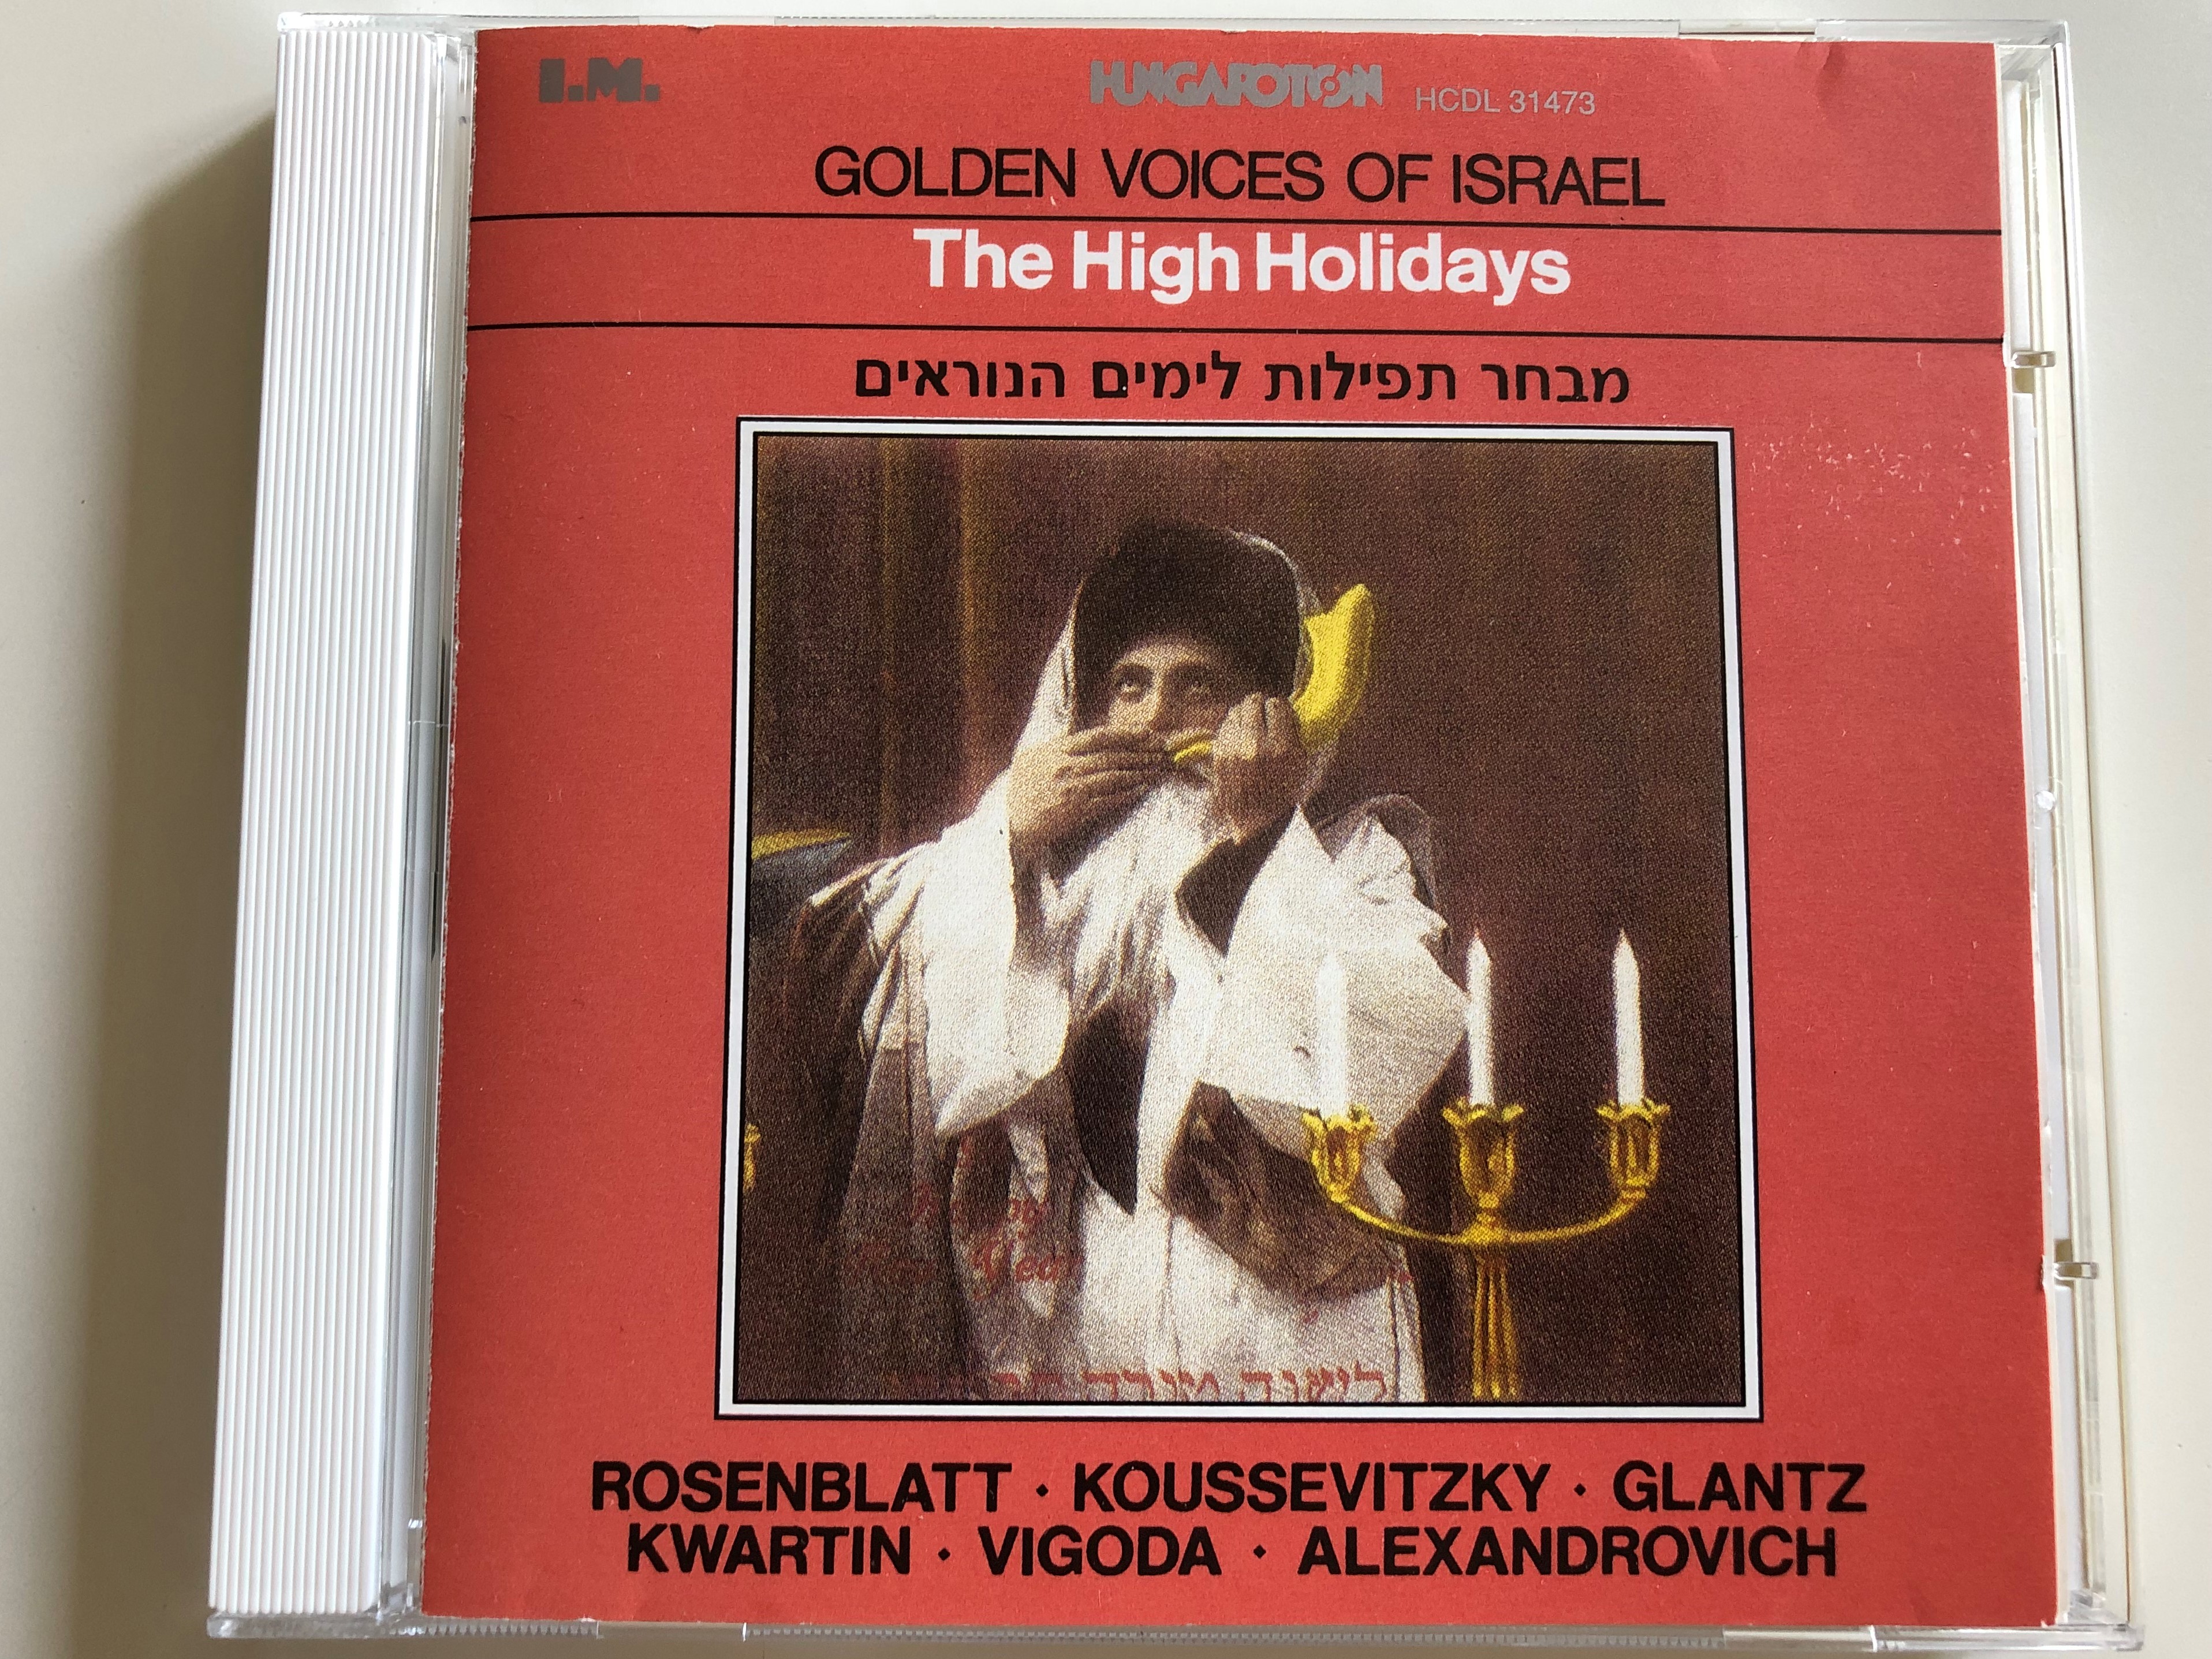 golden-voices-of-israel-the-high-holidays-rosenblatt-koussevitzky-glantz-kwartin-vigoda-alexandrovich-hungaroton-audio-cd-1992-hcdl-31473-1-.jpg